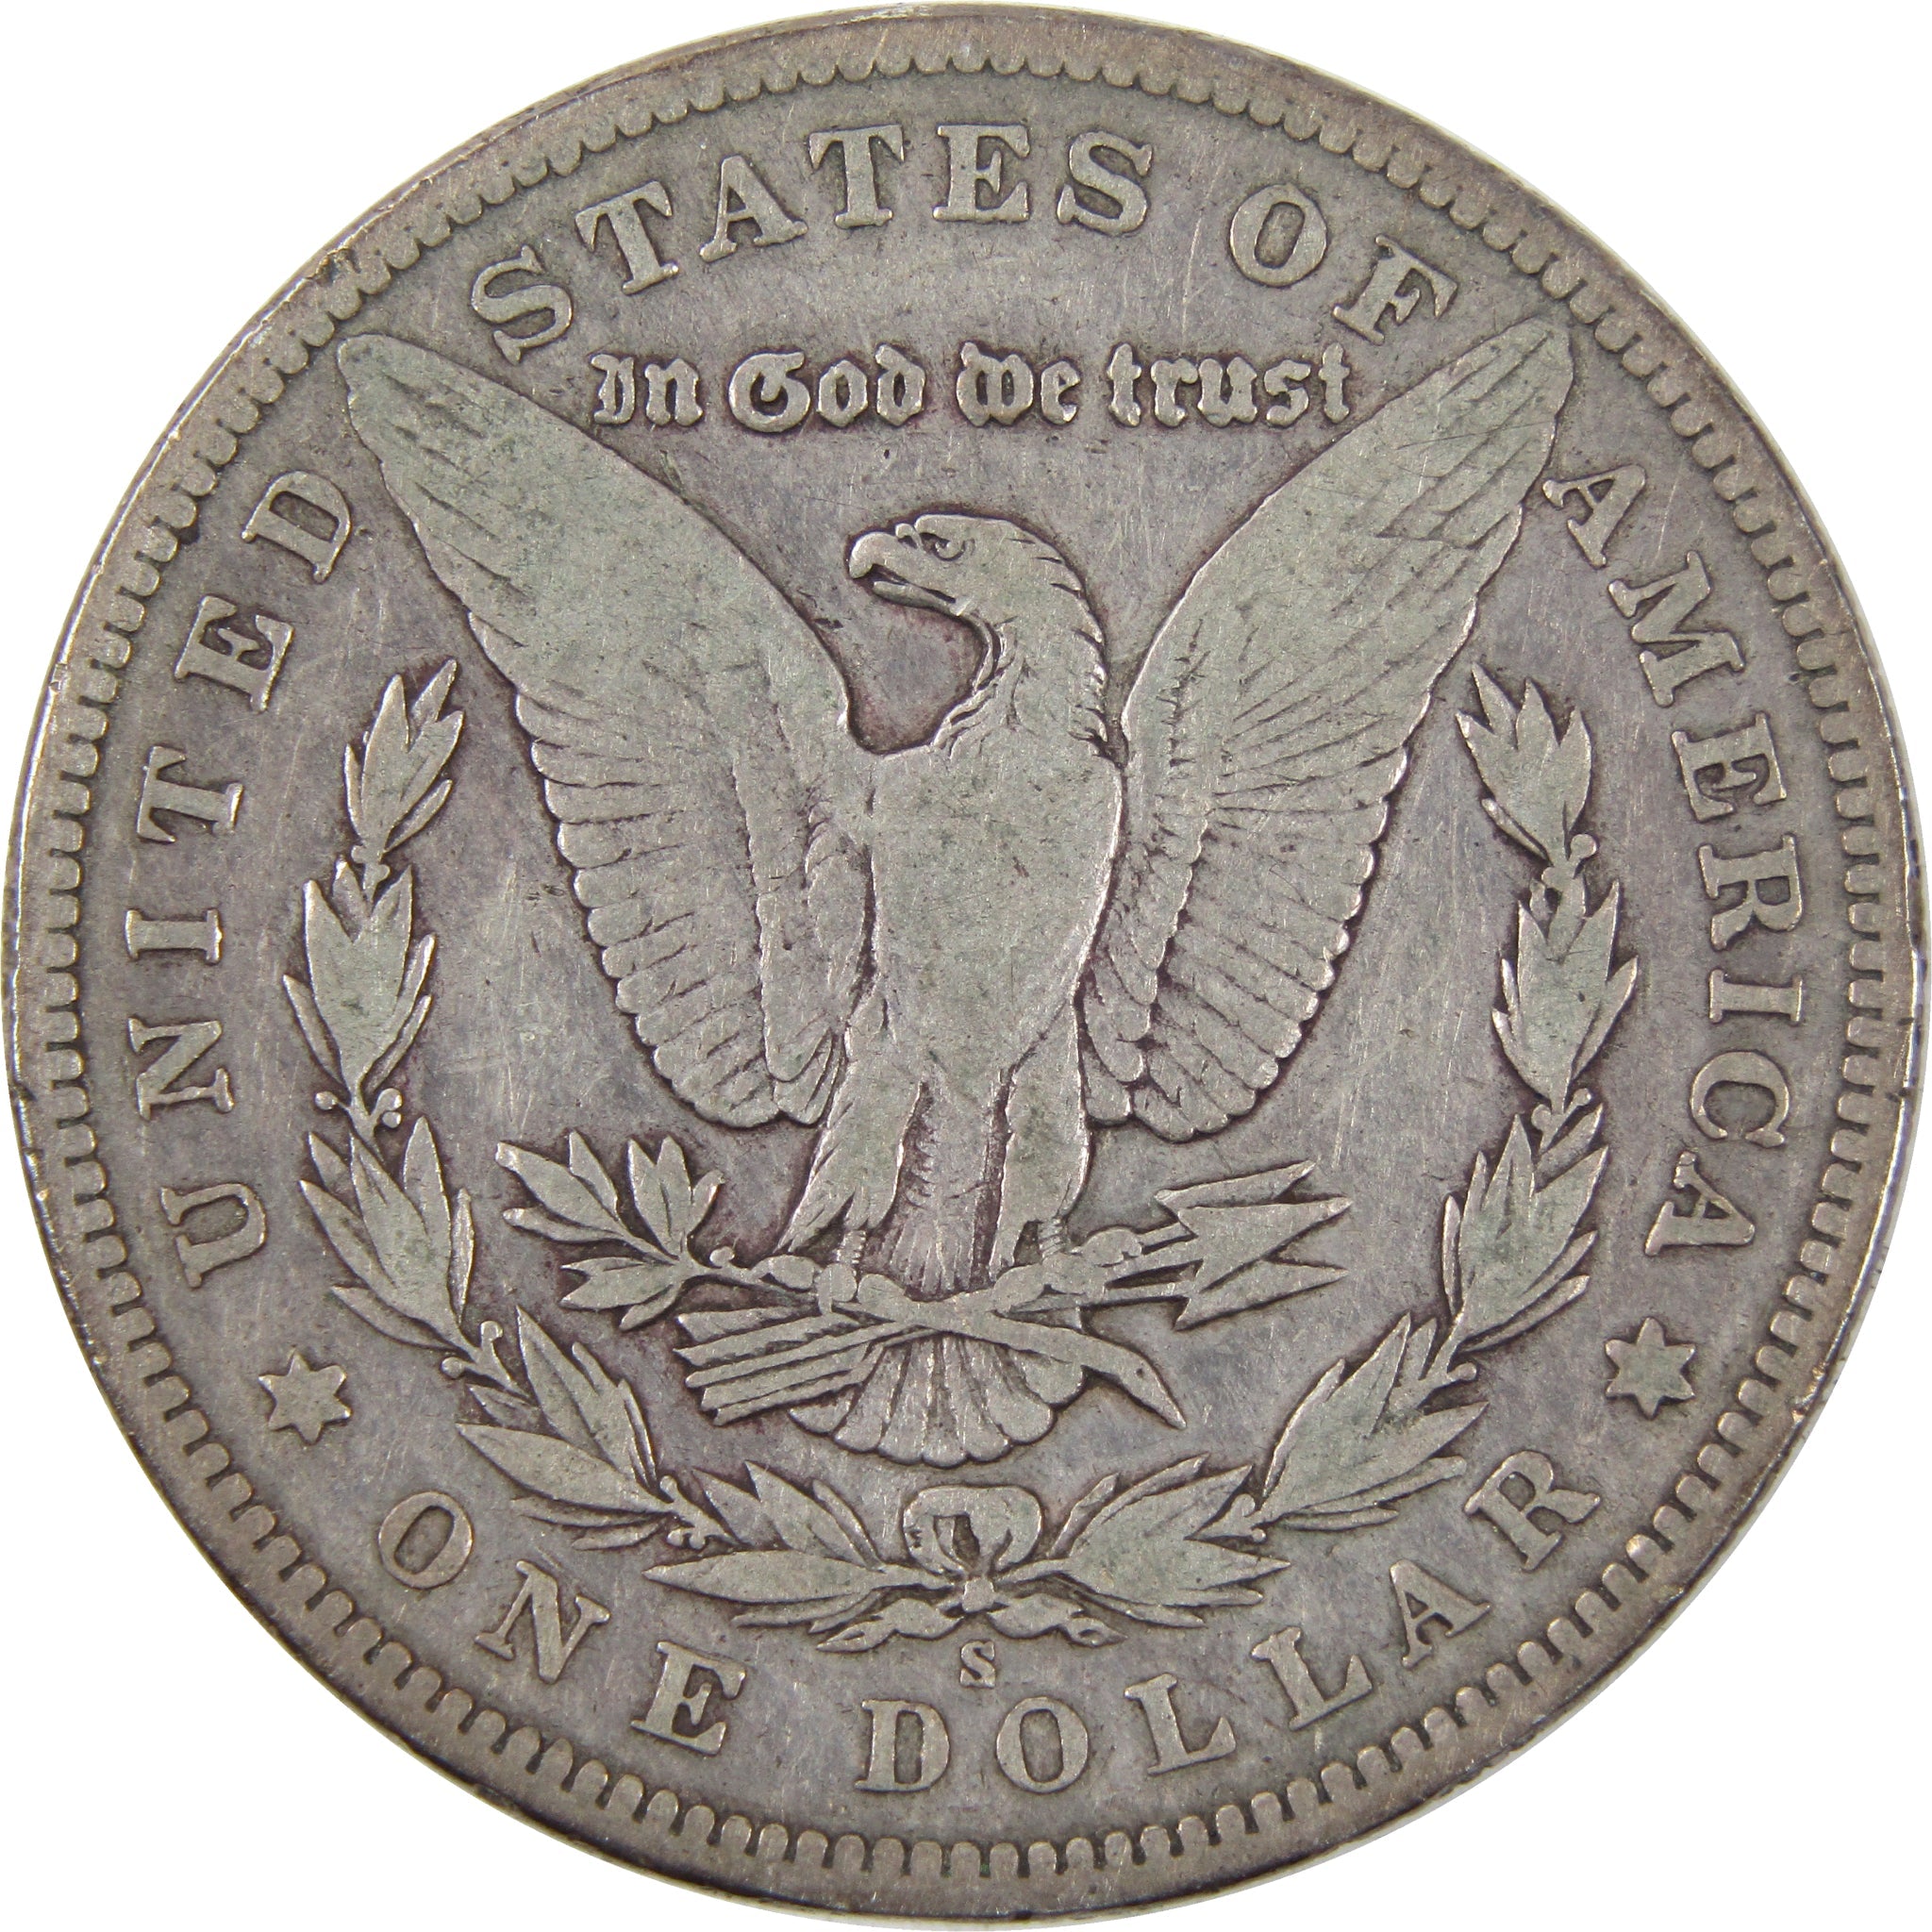 1896 S Morgan Dollar VG Very Good 90% Silver US Coin SKU:I2538 - Morgan coin - Morgan silver dollar - Morgan silver dollar for sale - Profile Coins &amp; Collectibles